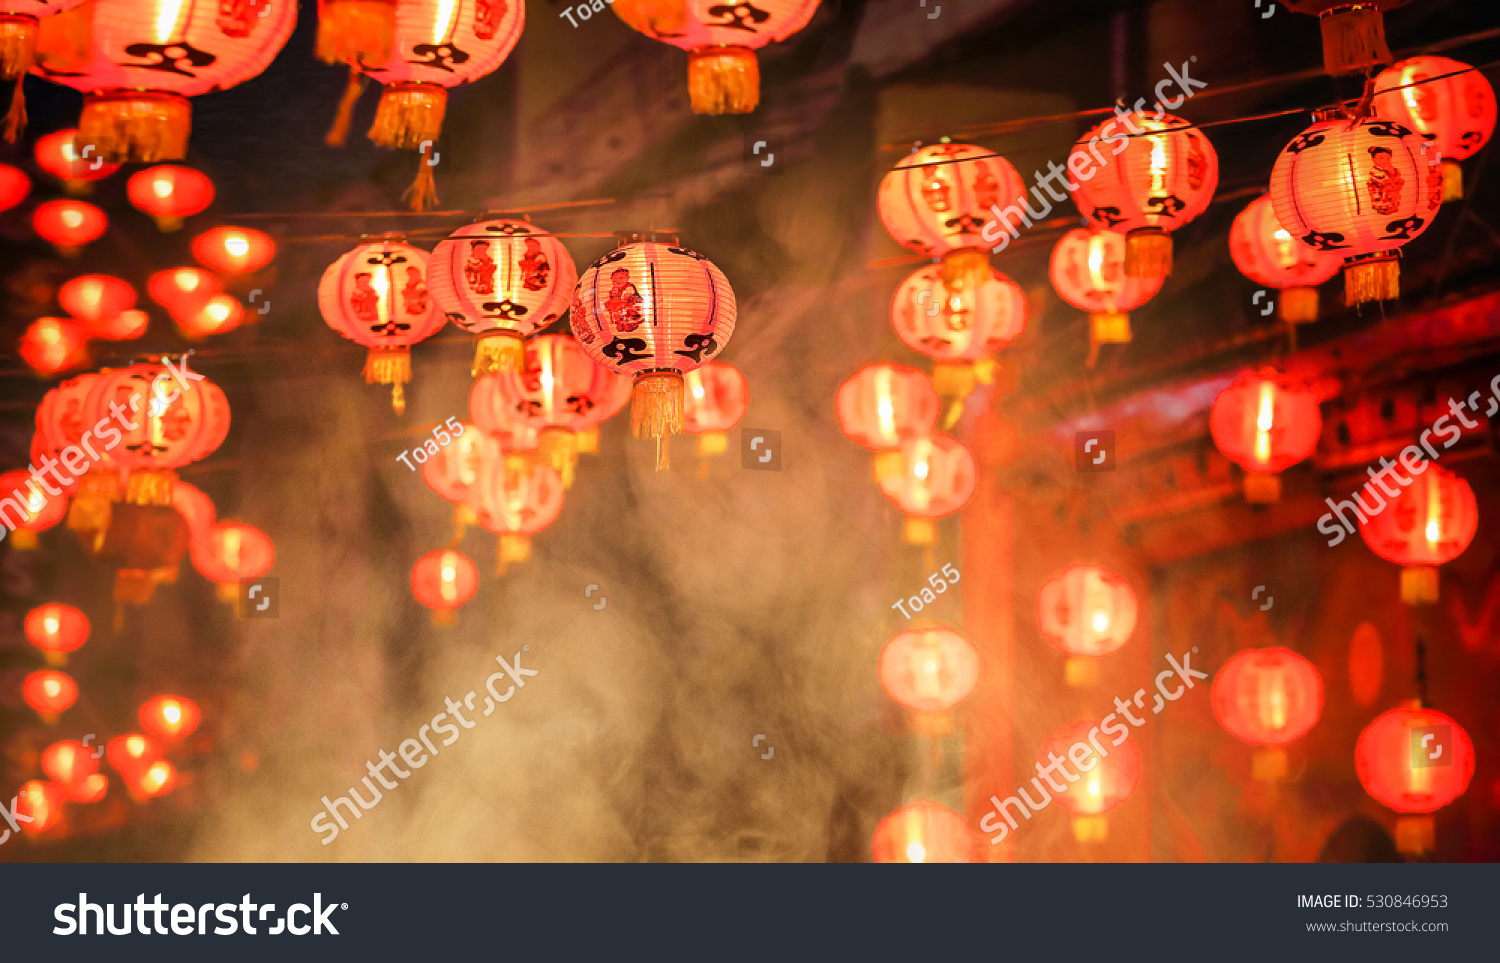 Chinese new year lanterns in chinatown, firecracker celebration #530846953